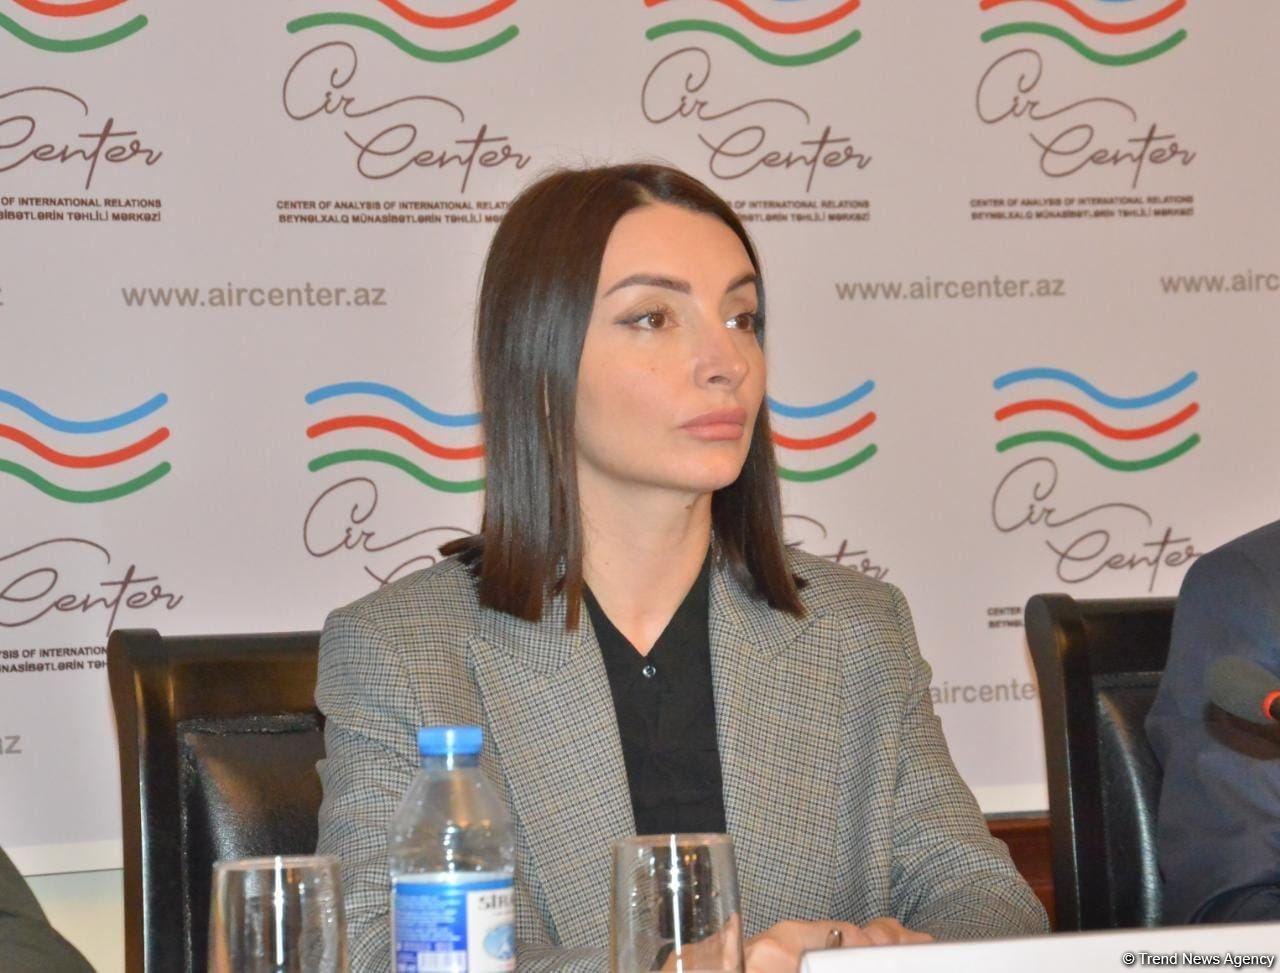 Azerbaijan demands from world community to increase pressure on Armenia due to its war crimes - MFA